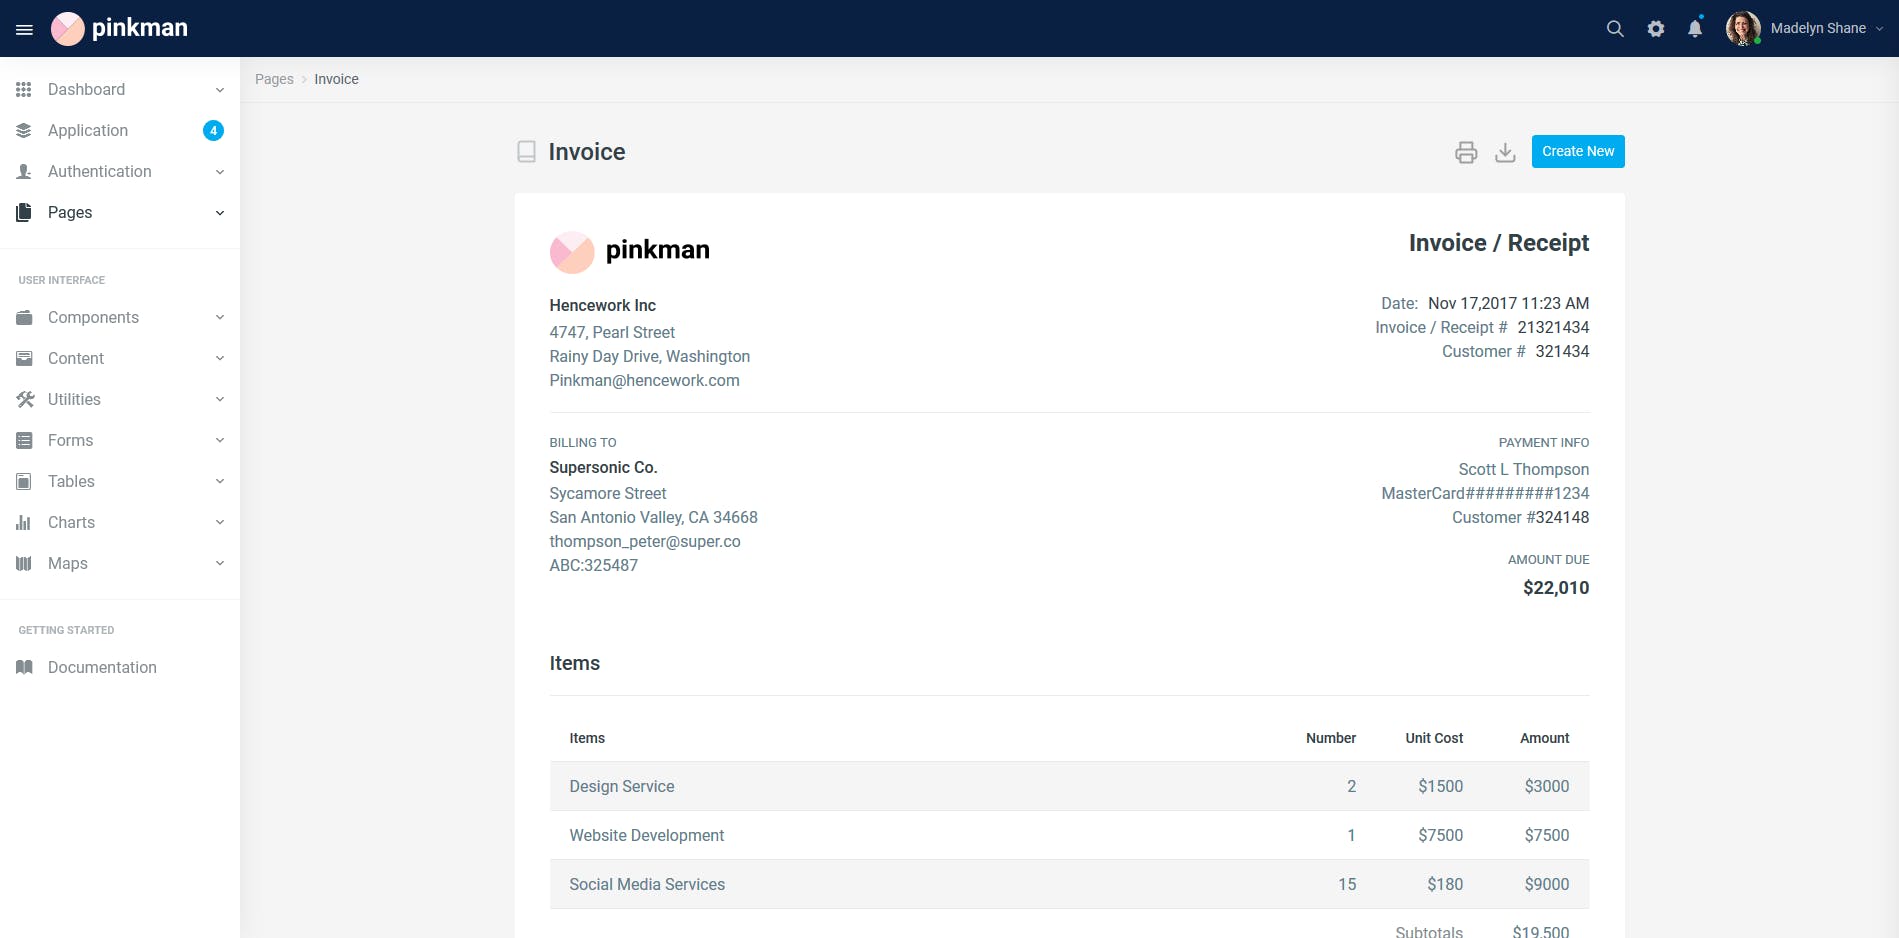 Bootstrap架构网站管理系统模板蚂蚁素材精选下载 Pinkman – Bootstrap 4 Admin Dashboard Template插图(14)